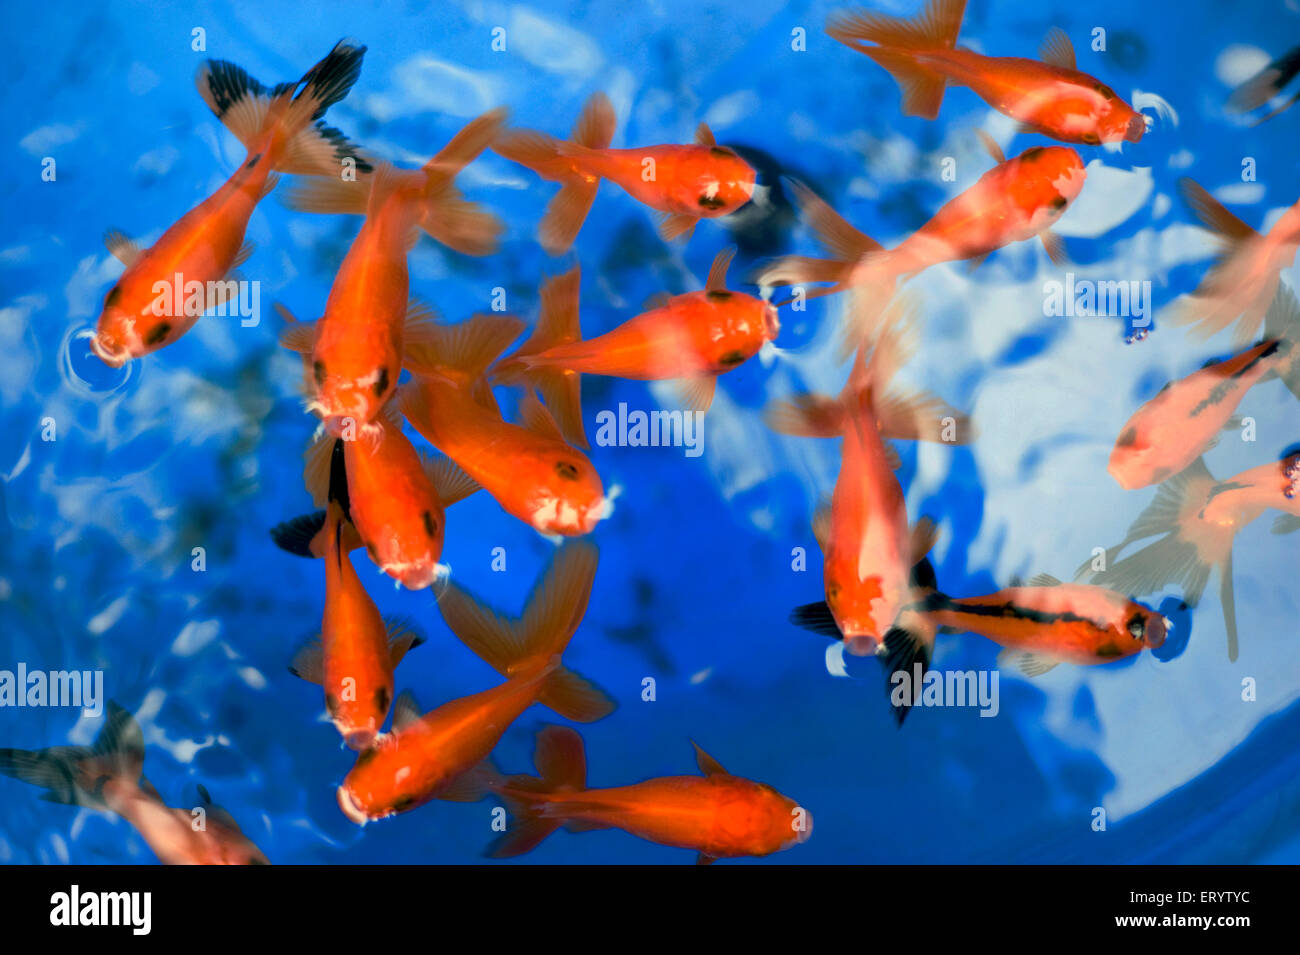 Oranda, race de poissons rouges, poissons d'aquarium, carassius auratus, marché aux poissons, Galiff Street, Calcutta, Kolkata, Bengale occidental, Inde, asie Banque D'Images